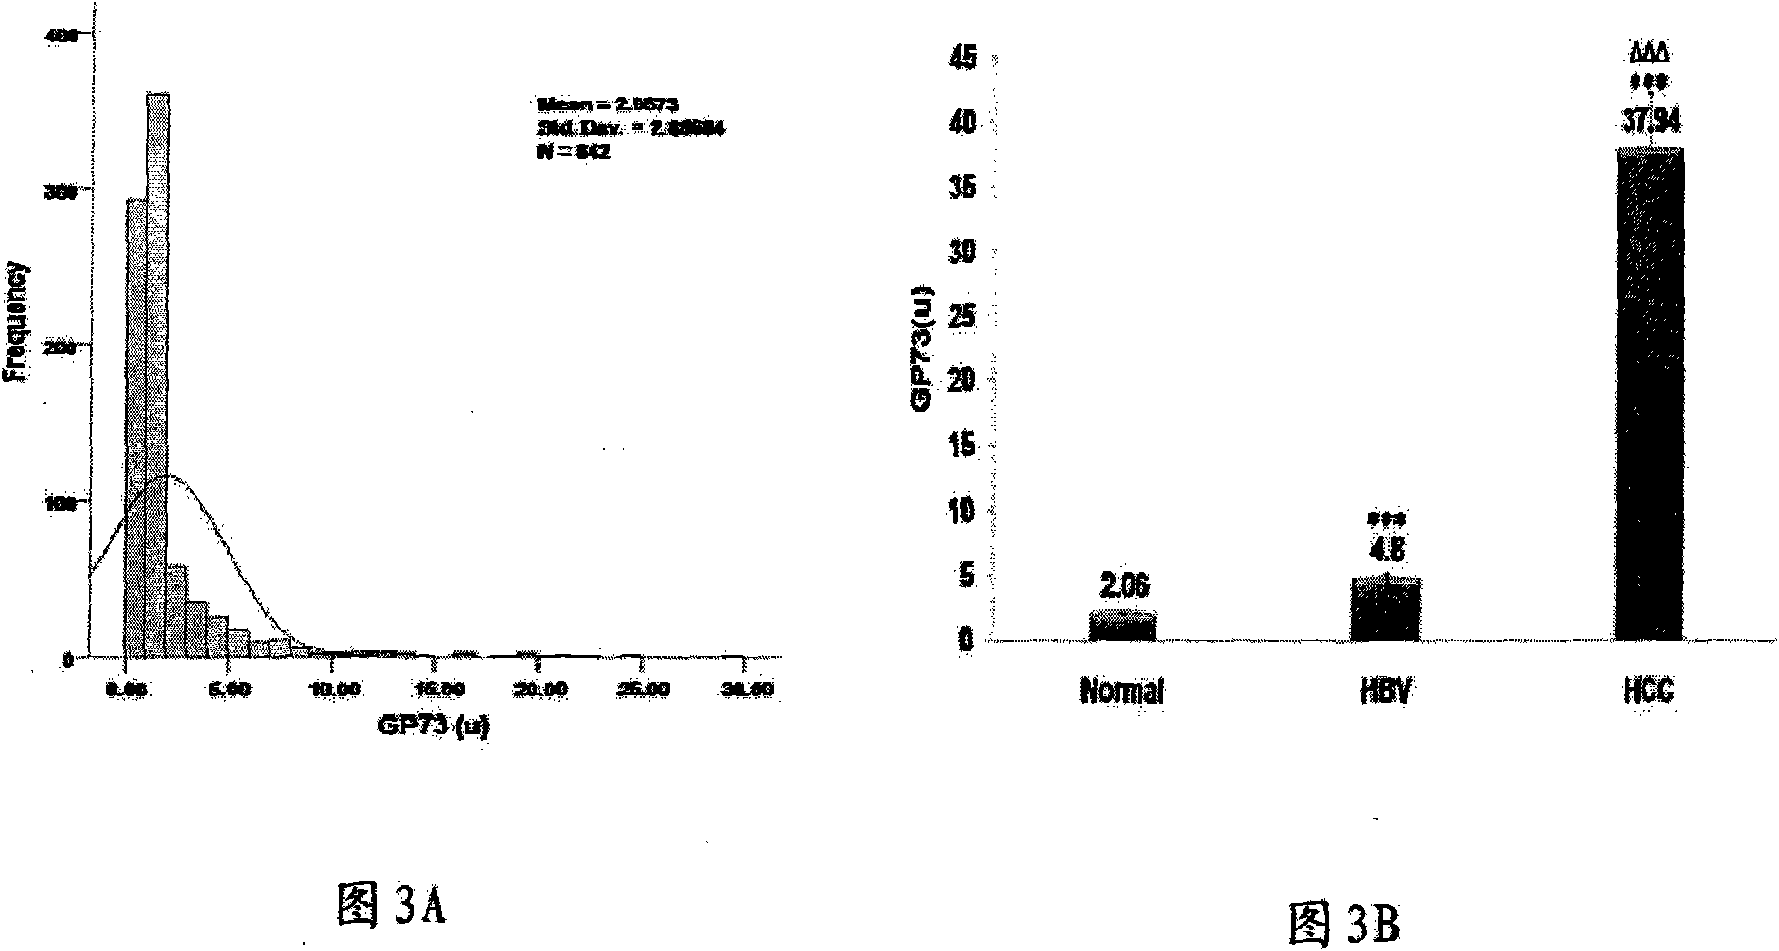 Antibody of fucosylated Golgi protein GP73 and use thereof